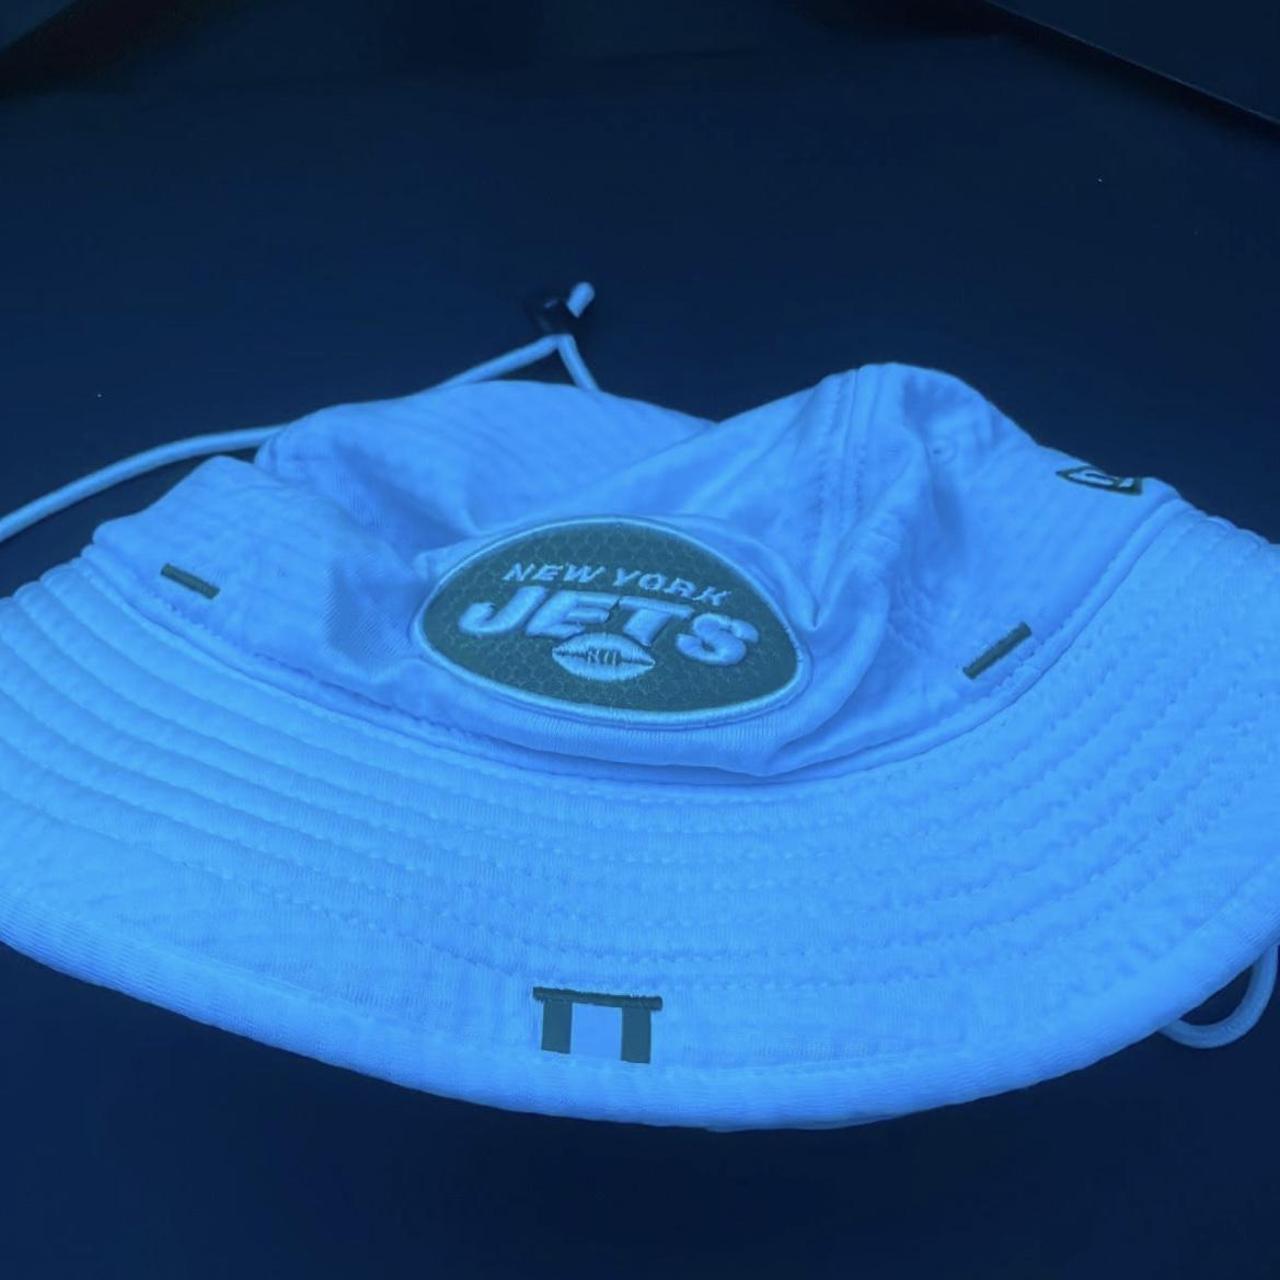 new york jets bucket hat